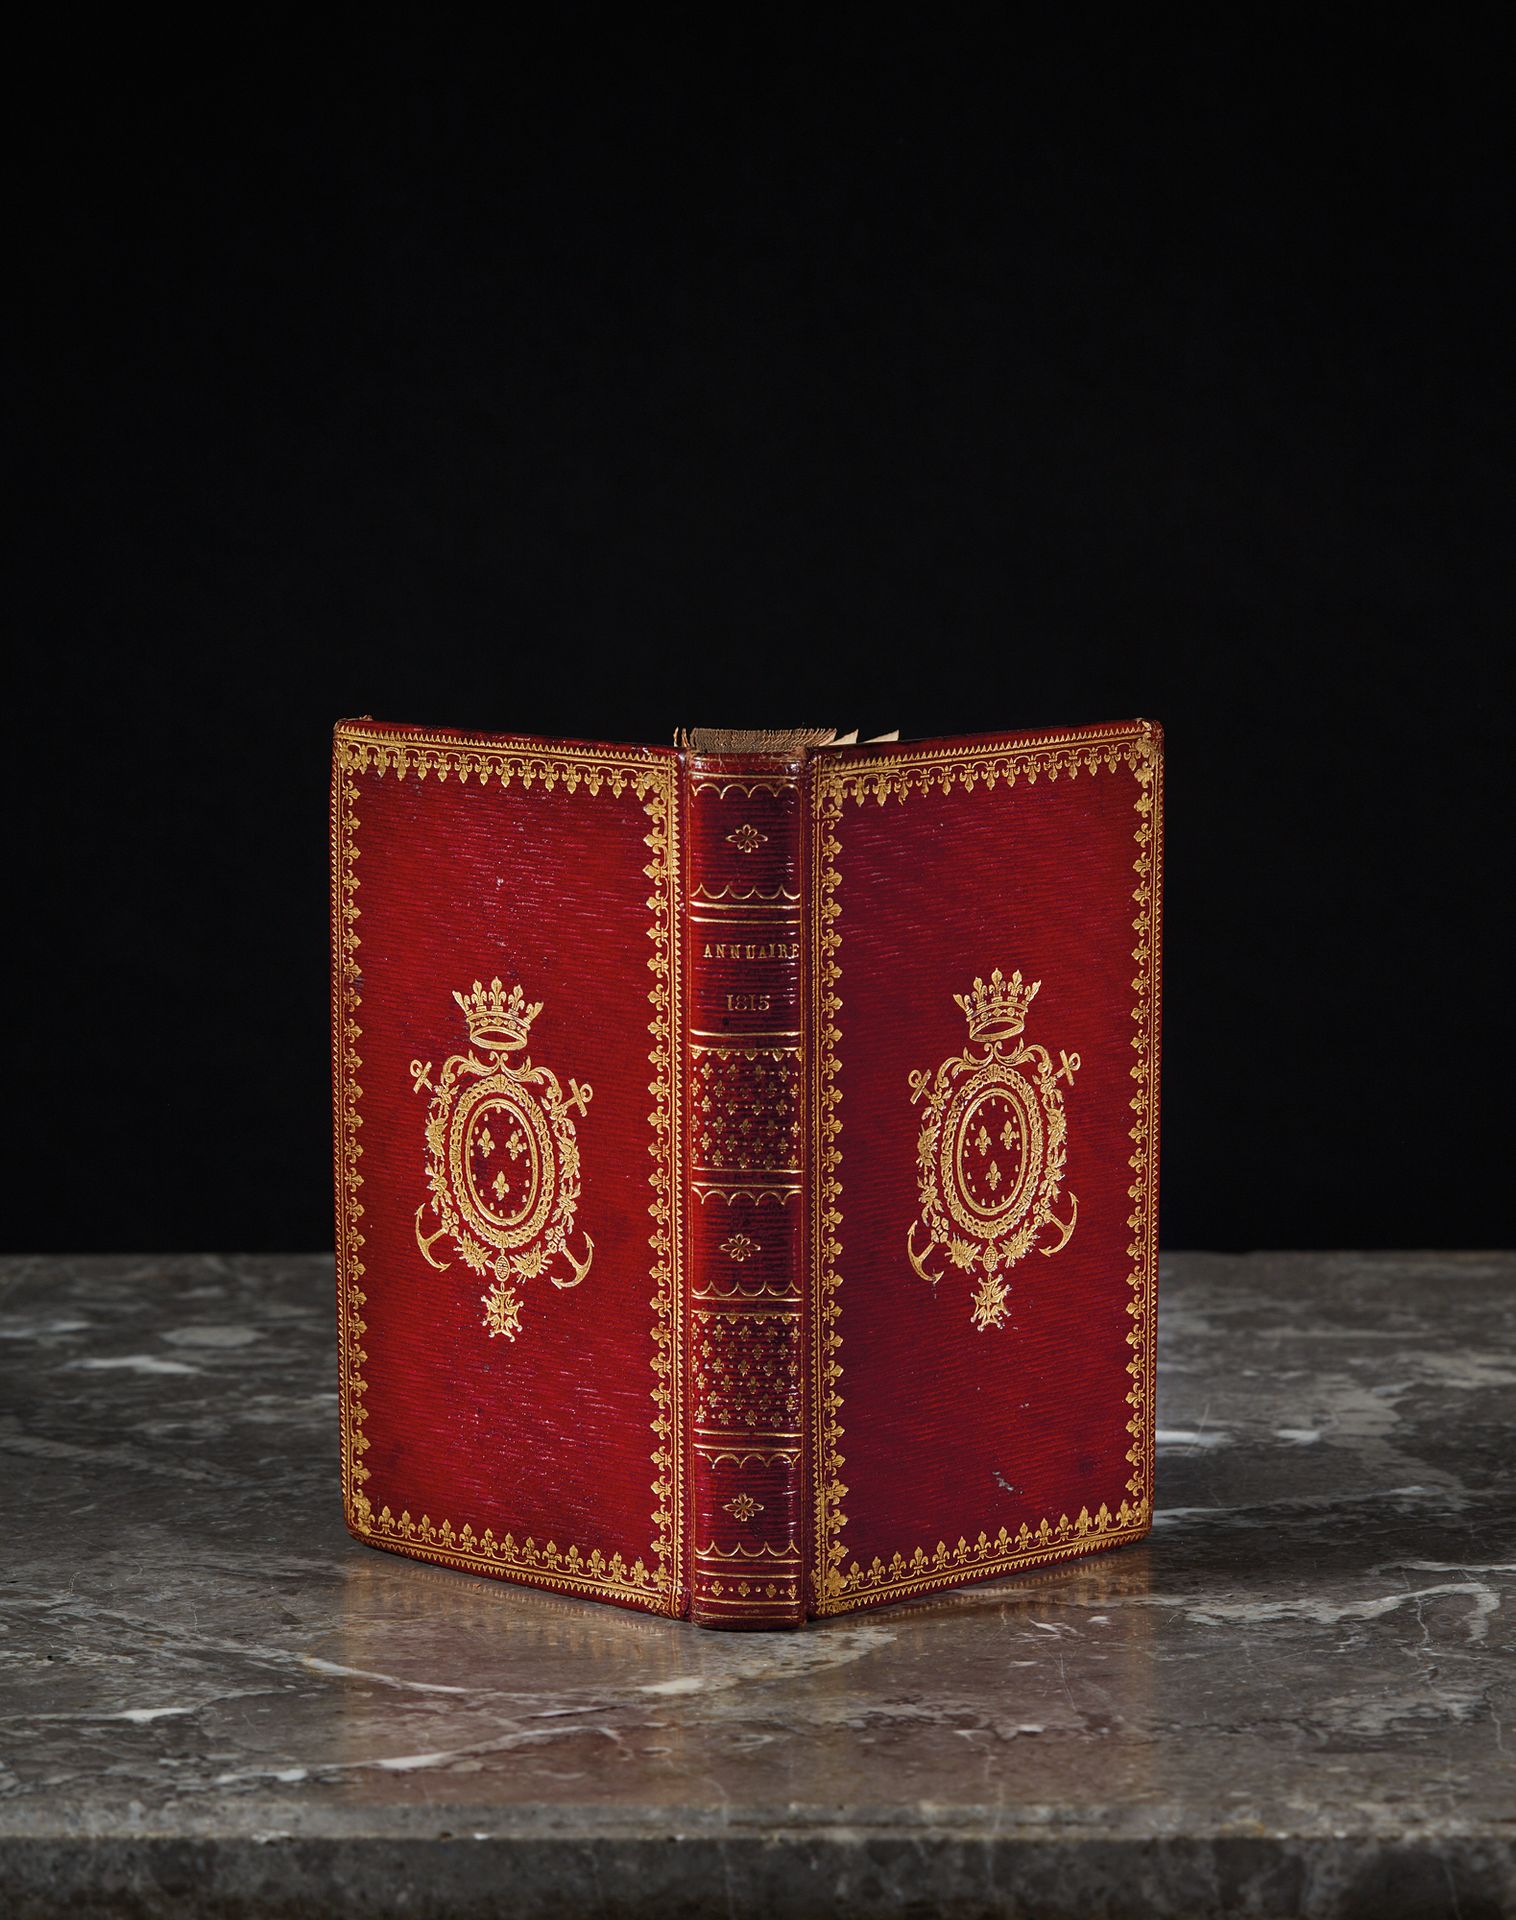 Null [ANNUAIRE]
1815年经度局提交给国王的年鉴。巴黎，Veuve Courcier于1814年出版。12开本，长纹红色摩洛哥，板面上有以安古兰&hellip;